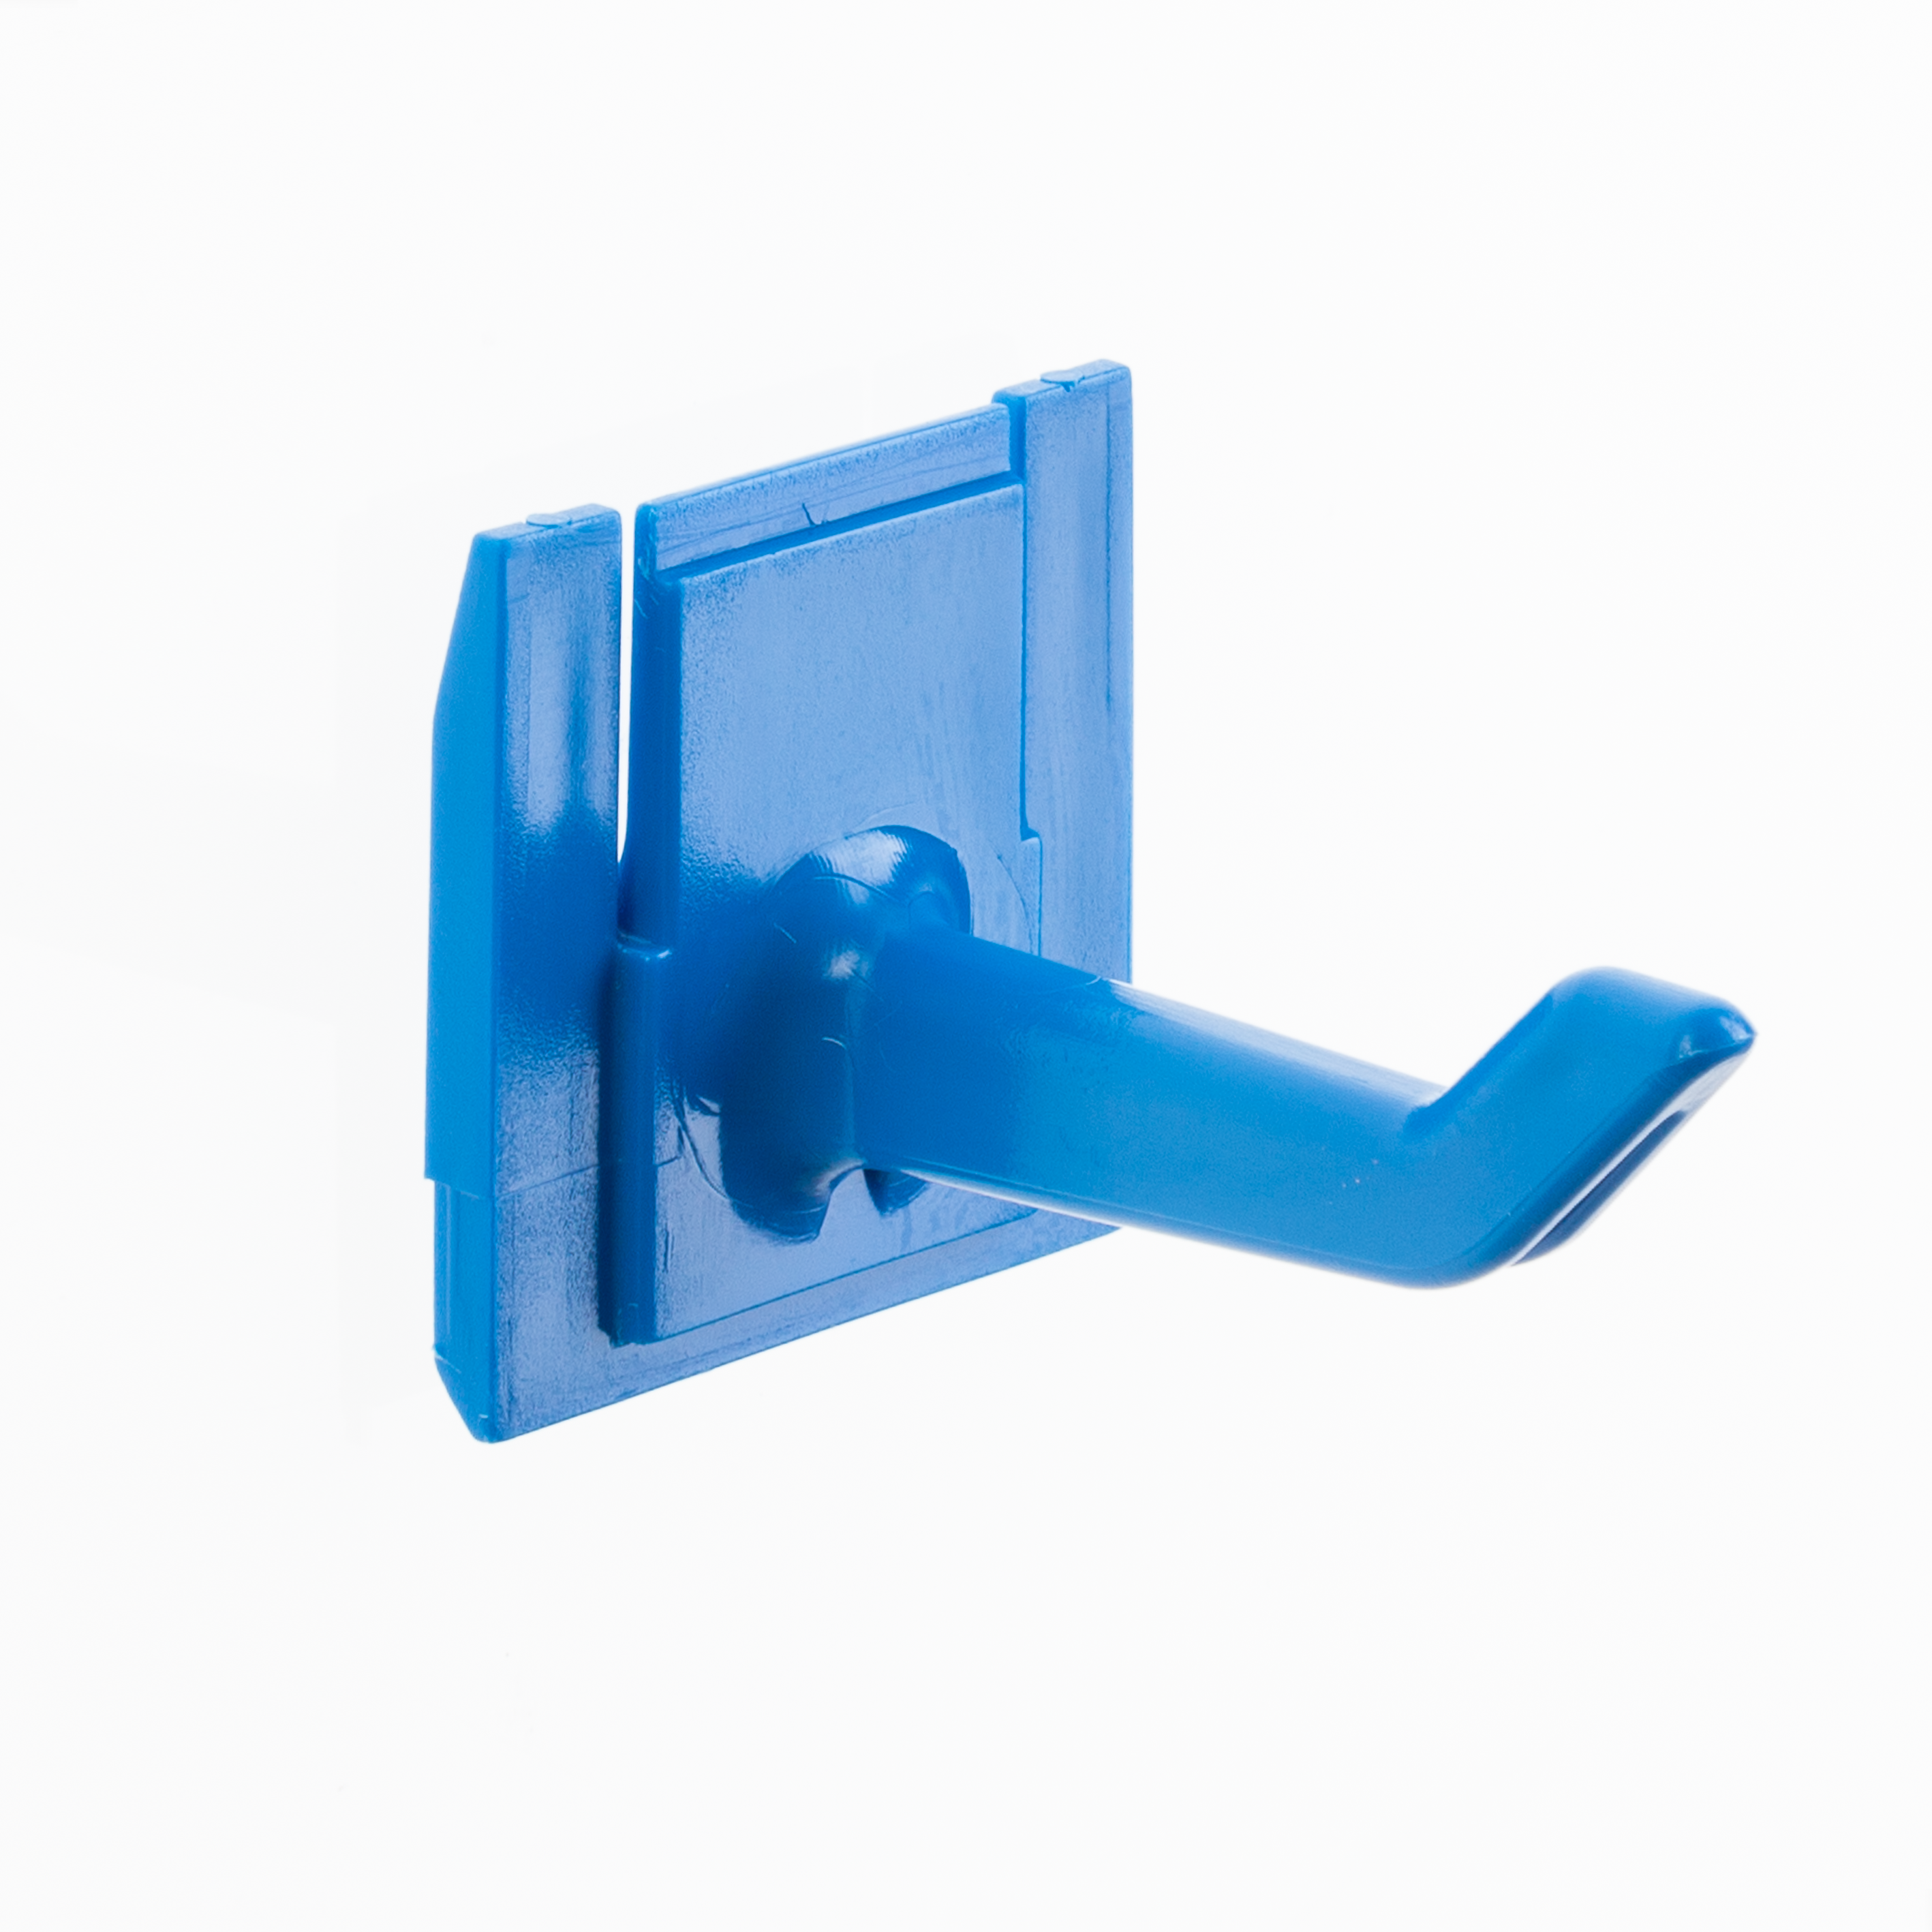 Toolflex Kunststoffhaken für Alu-Schiene in blau